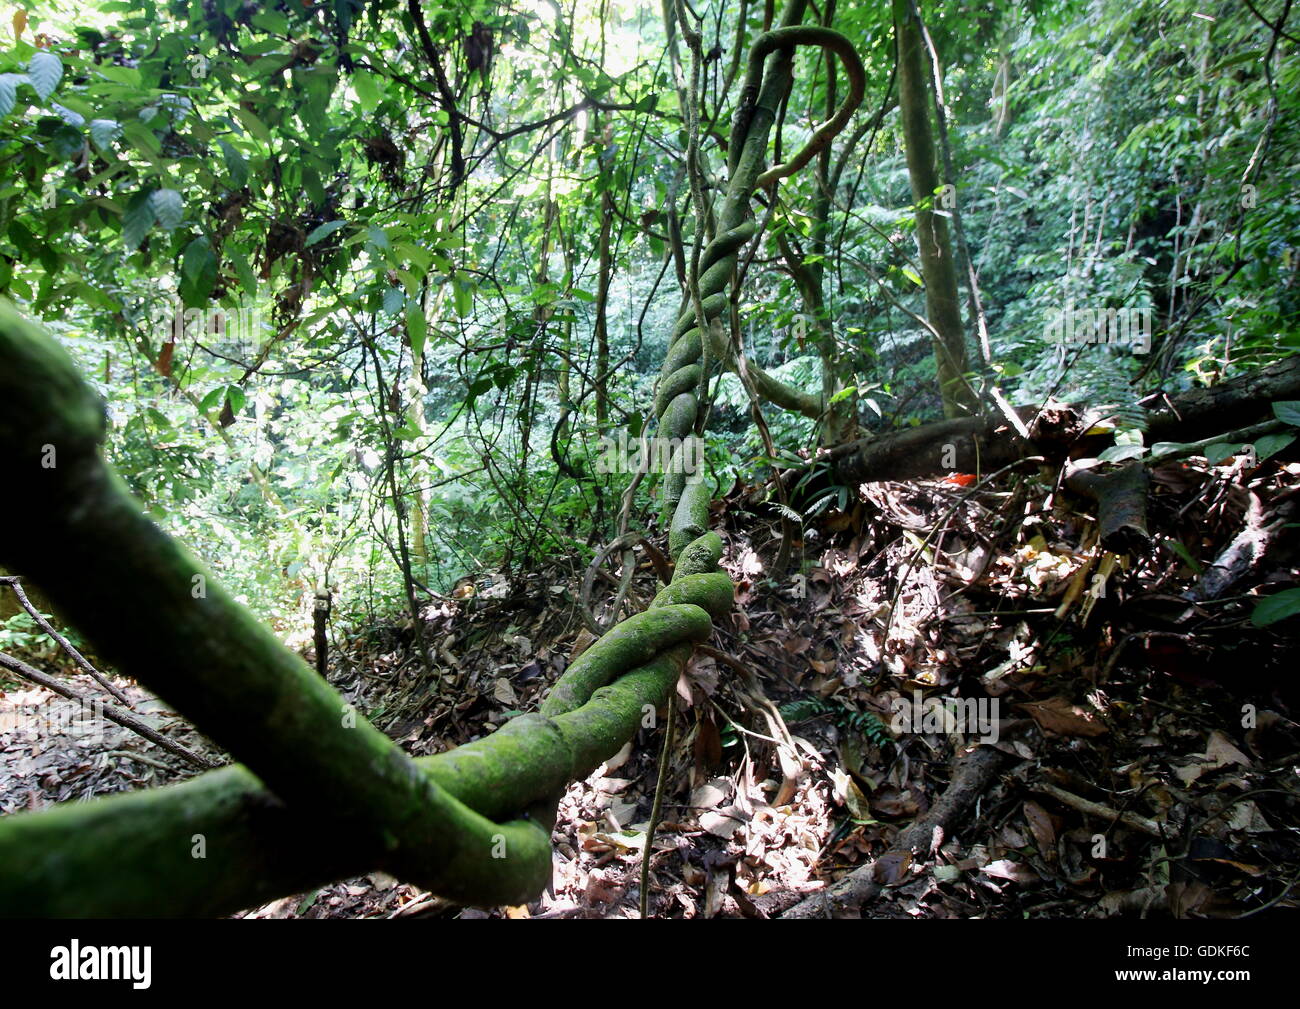 Twisted vine, also called liana, inside a tropical jungle. Stock Photo